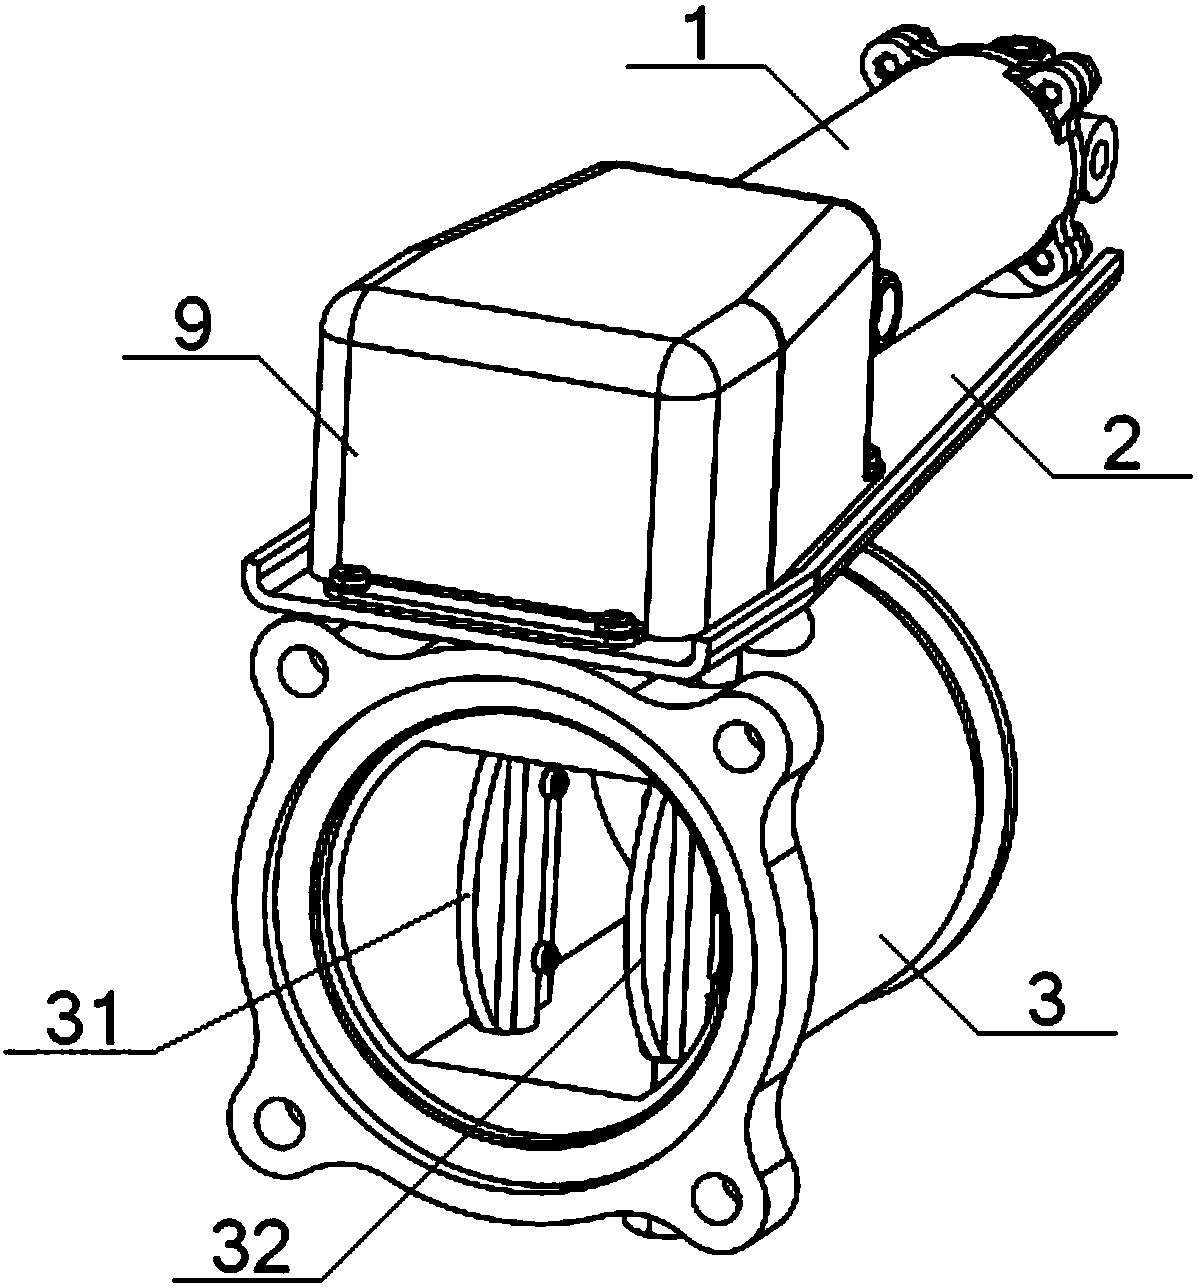 Exhaust brake valve for engine